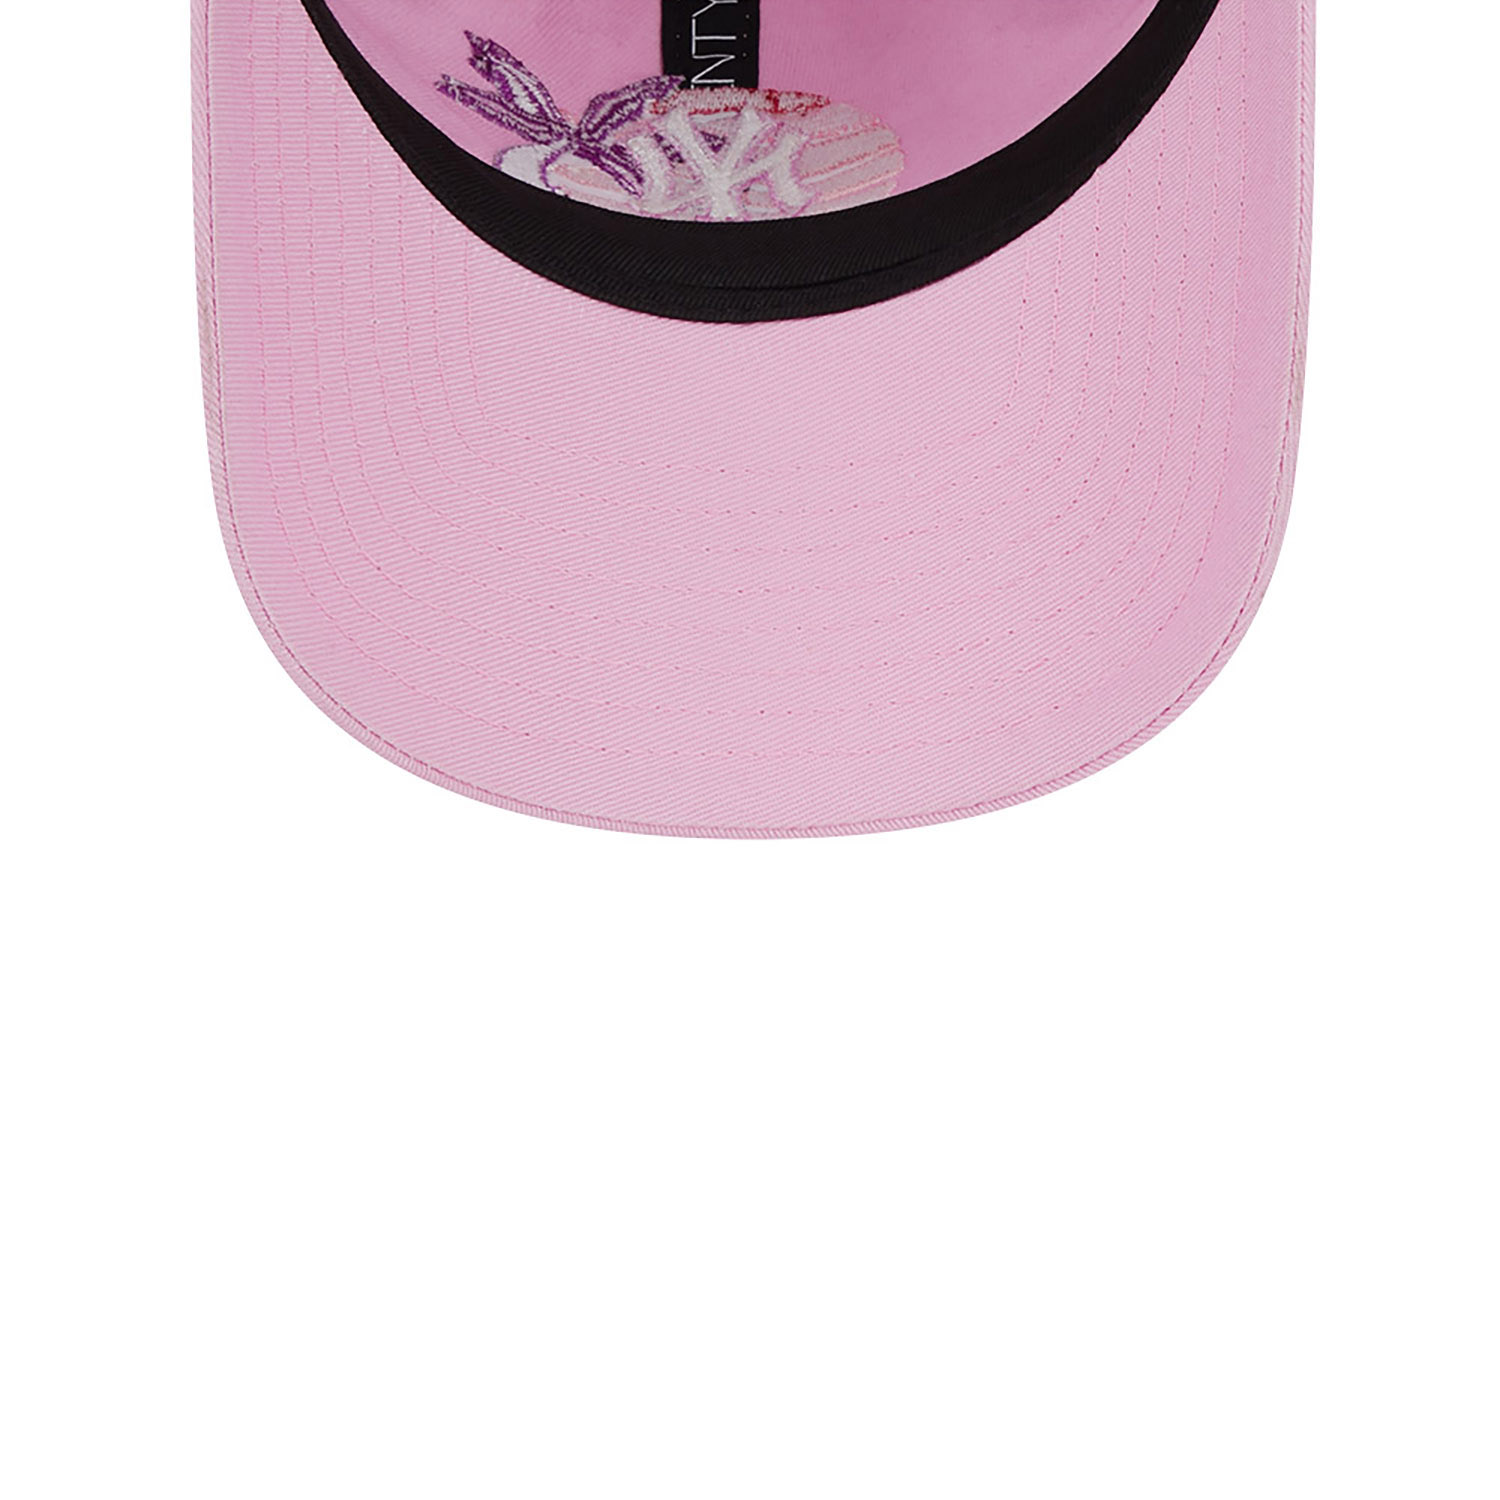 New York Yankees Womens Sun Pastel Pink 9TWENTY Adjustable Cap